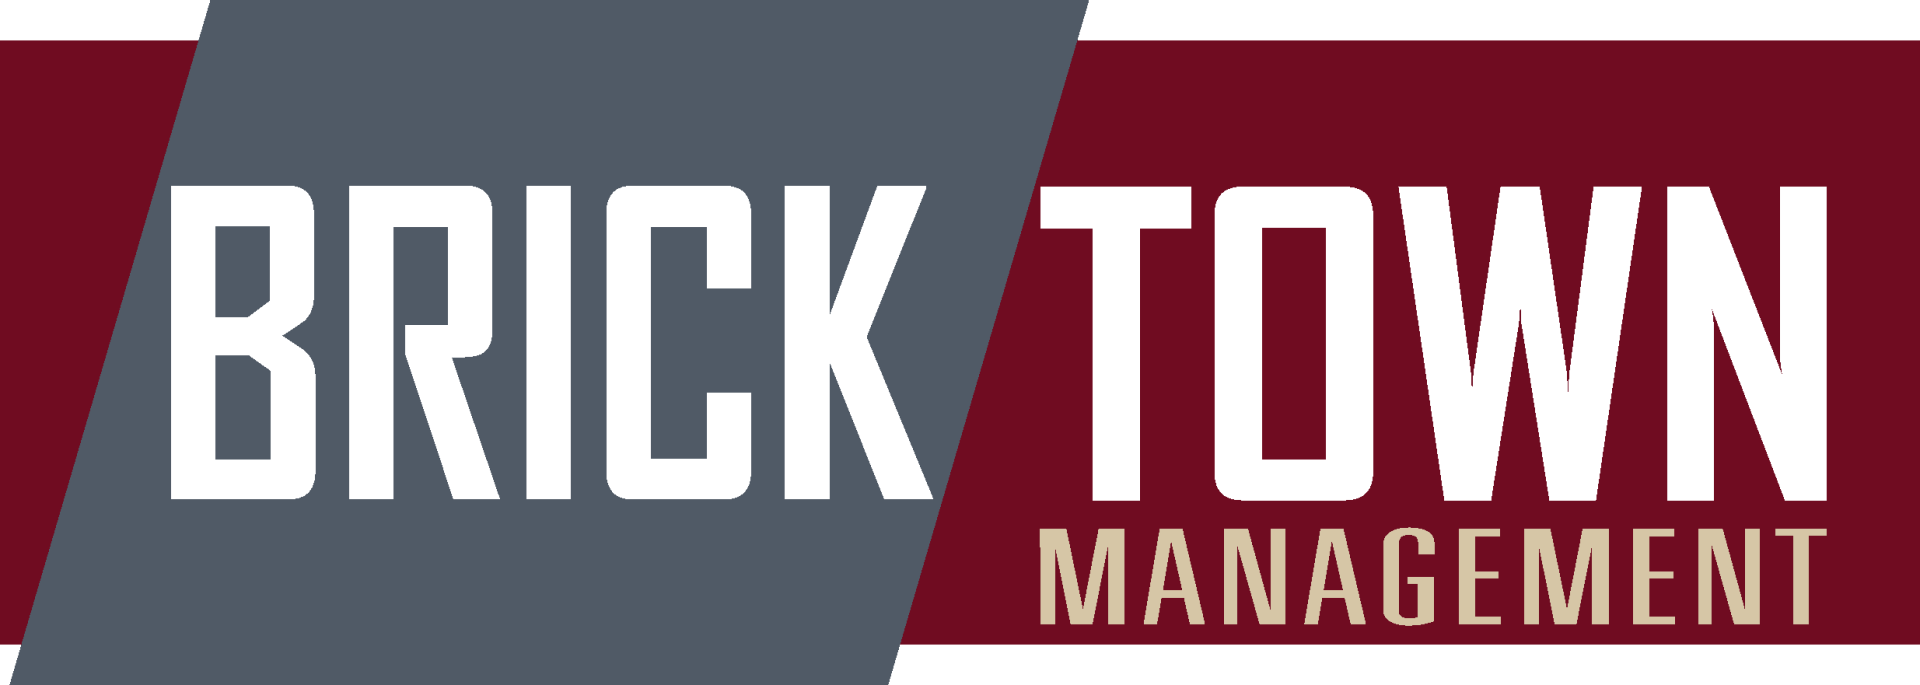 Brick Town Management Logo